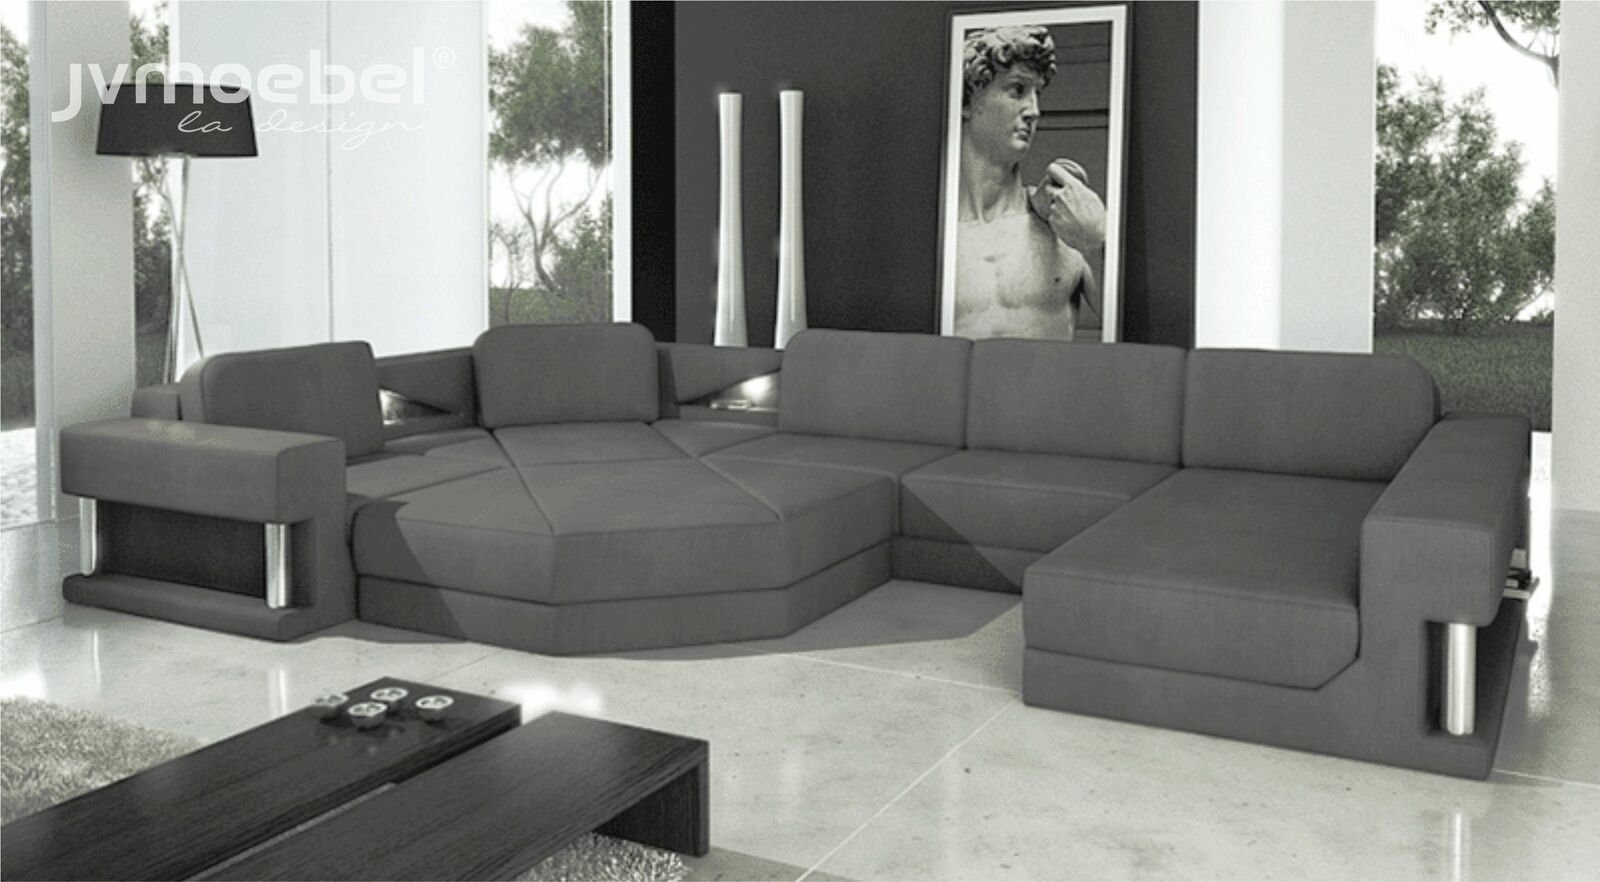 JVmoebel Ecksofa, Design Couch Polster Textil Modern Schlaf Bettfunktion Ecksofa U-Form | Ecksofas